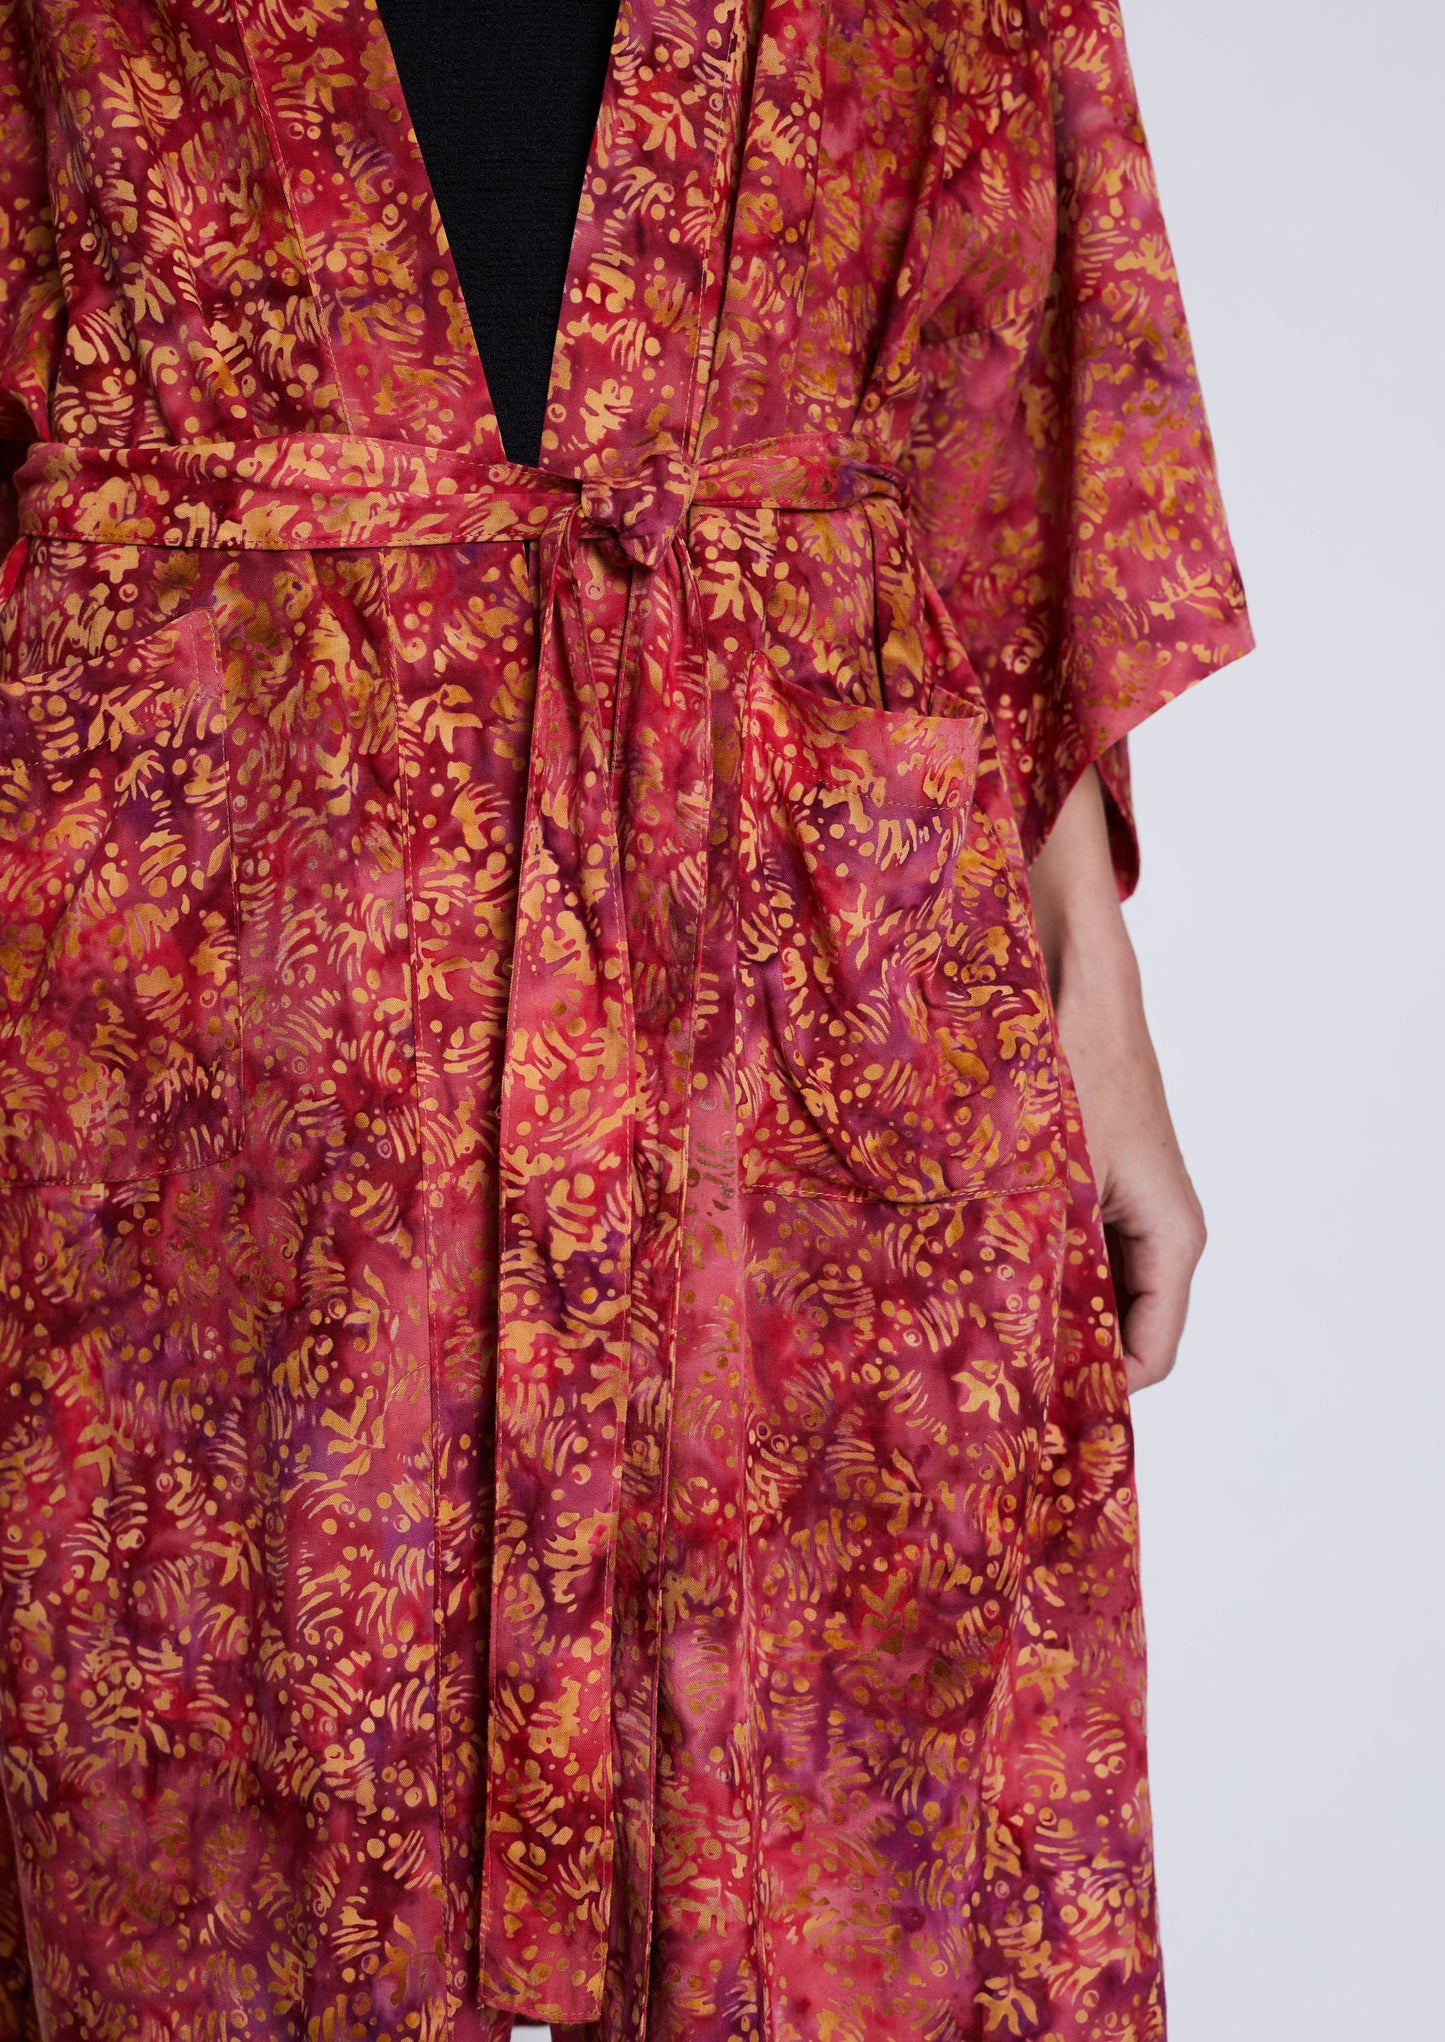 Long Red-Gold handmade Kimono